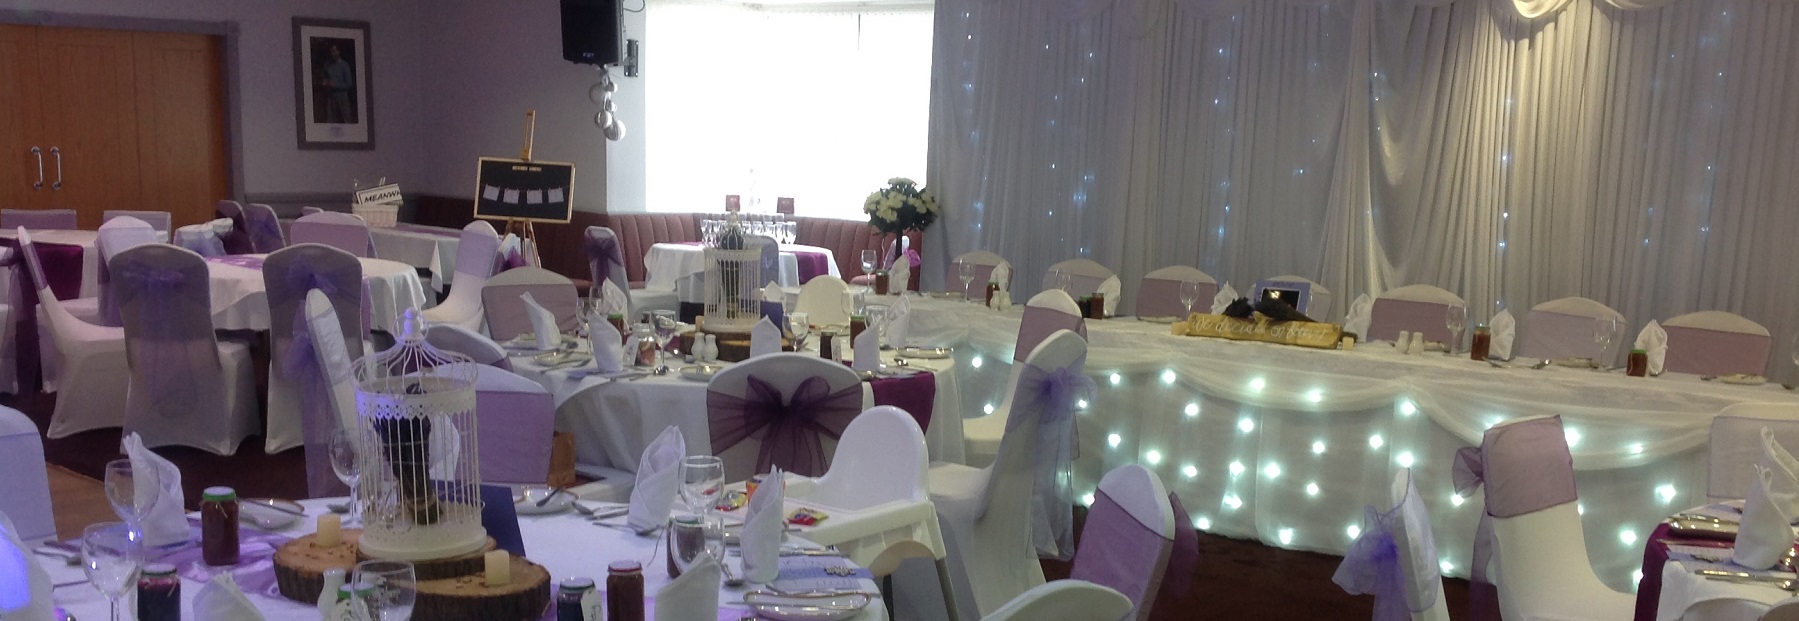 Wedding venue Aberdare South Wales